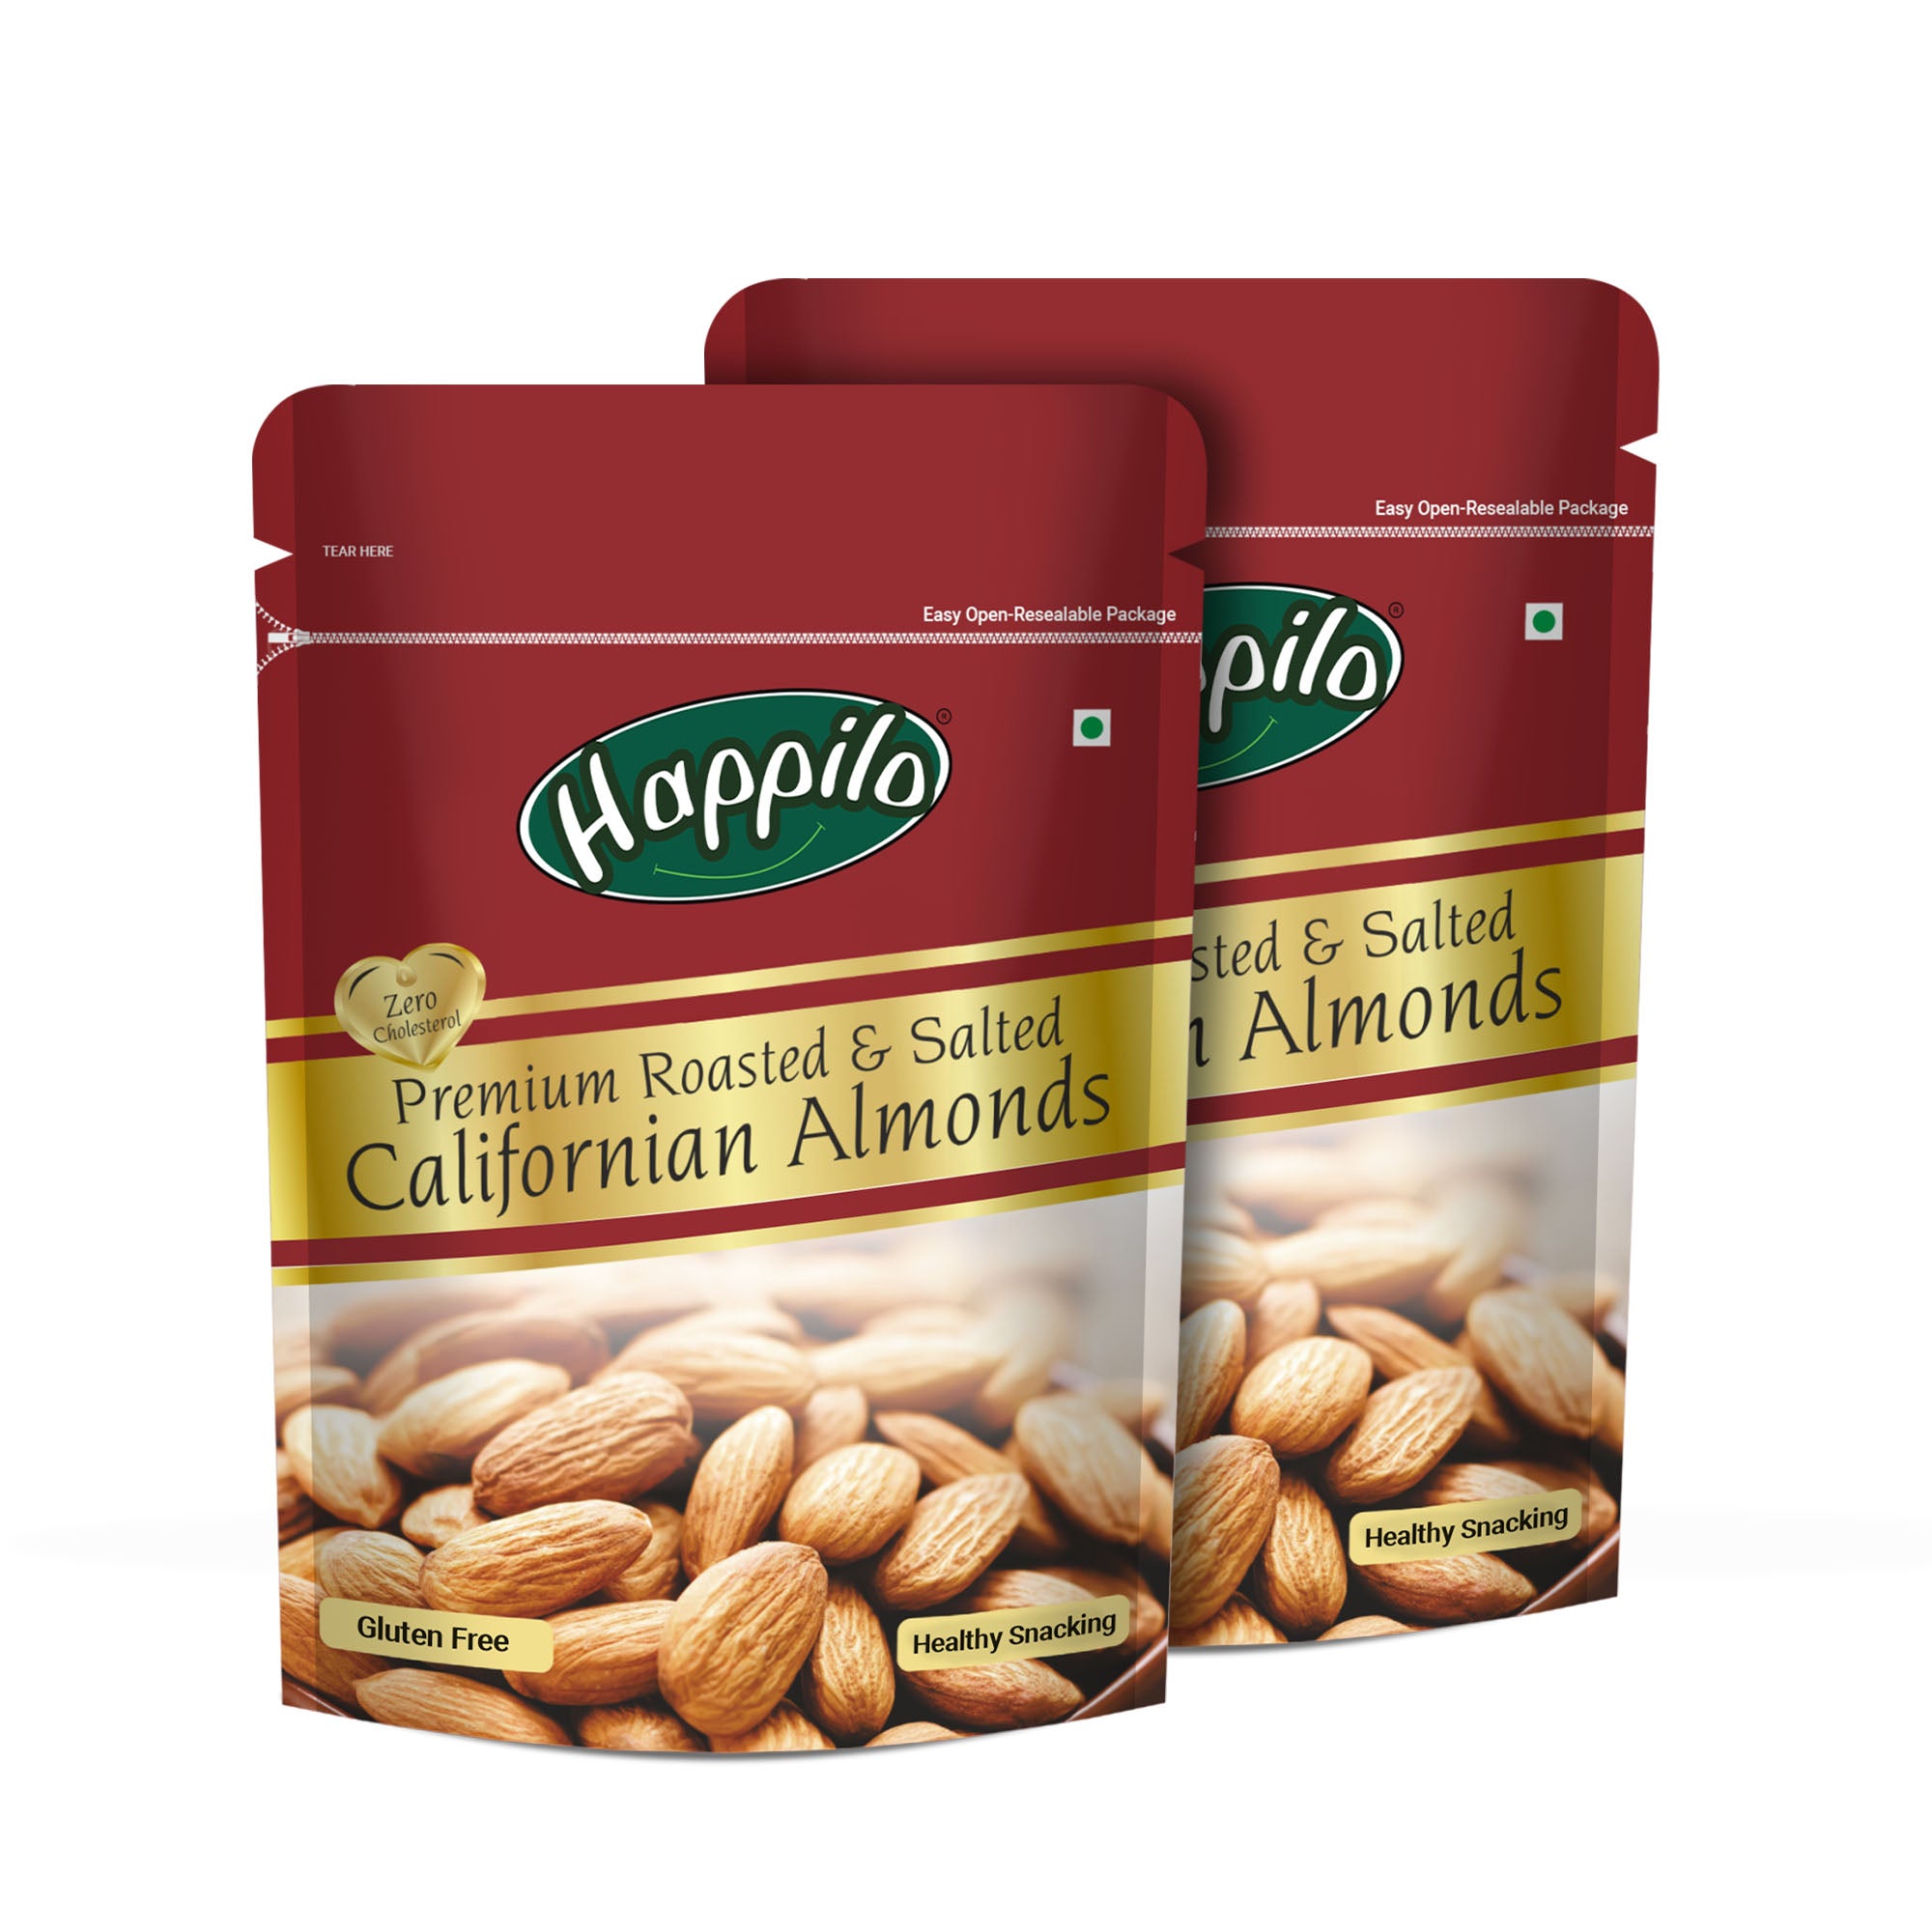 Happilo Roasted & Lightly Salted Premium Californian Almonds